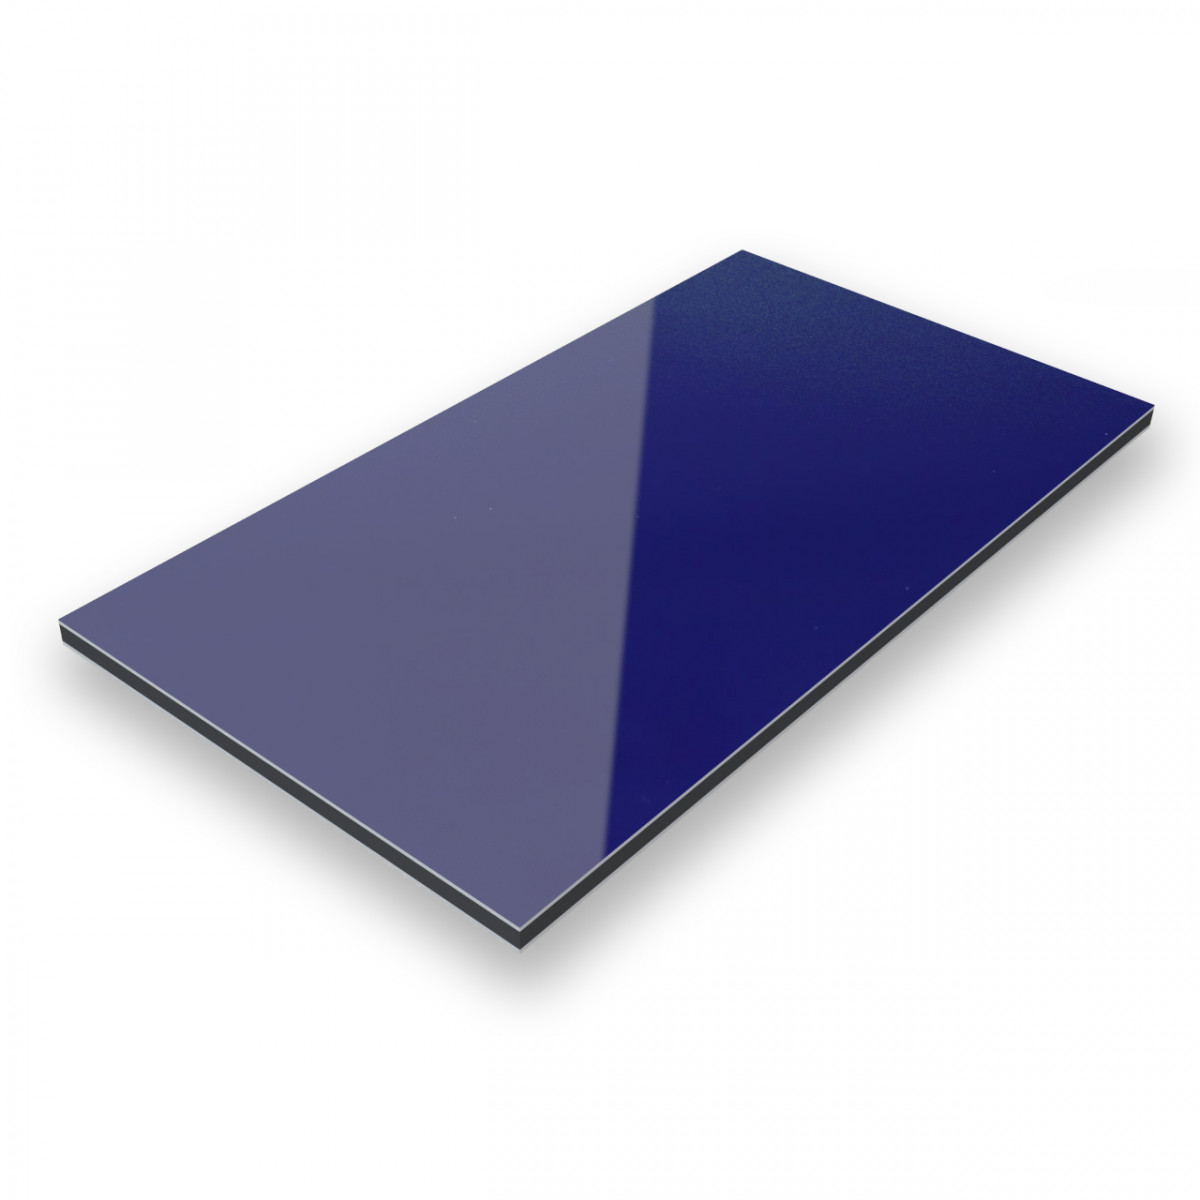 Muster Aluverbundplatte Sign-Serie Nachtblau 5022